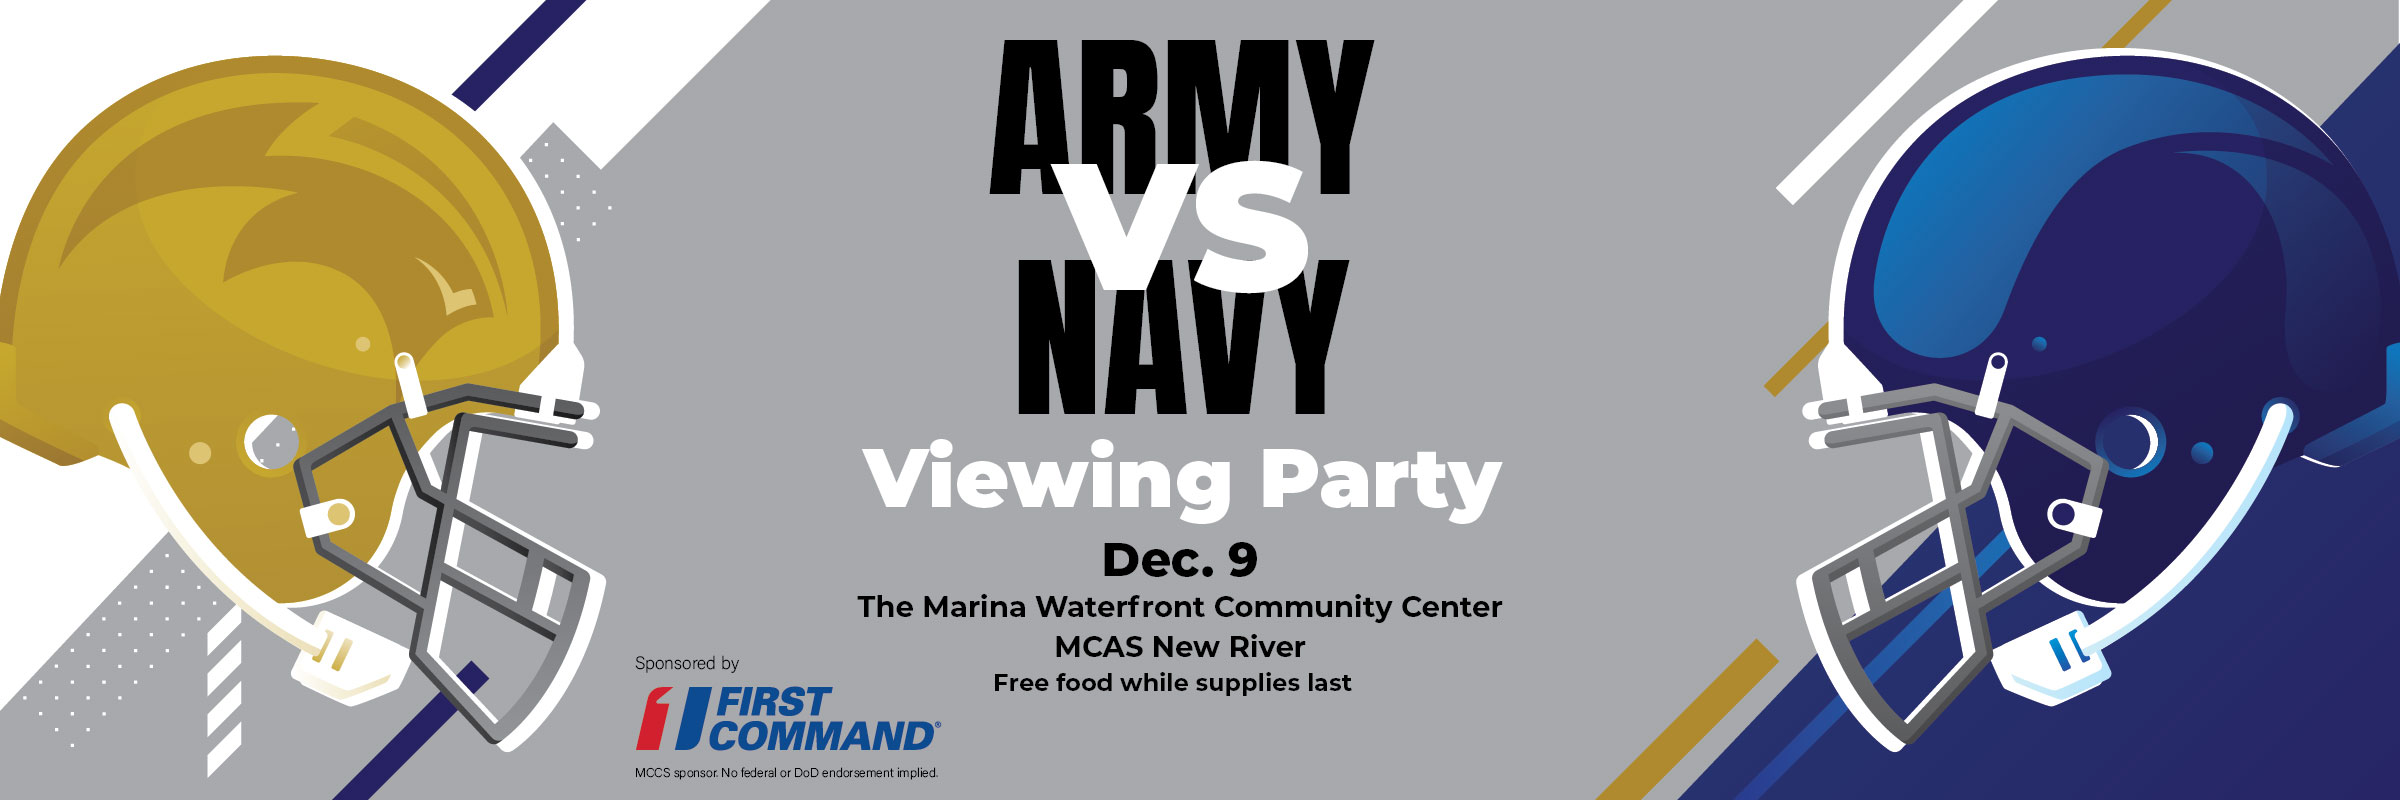 120923-marina-army-navy-viewing-party-rotator.jpg